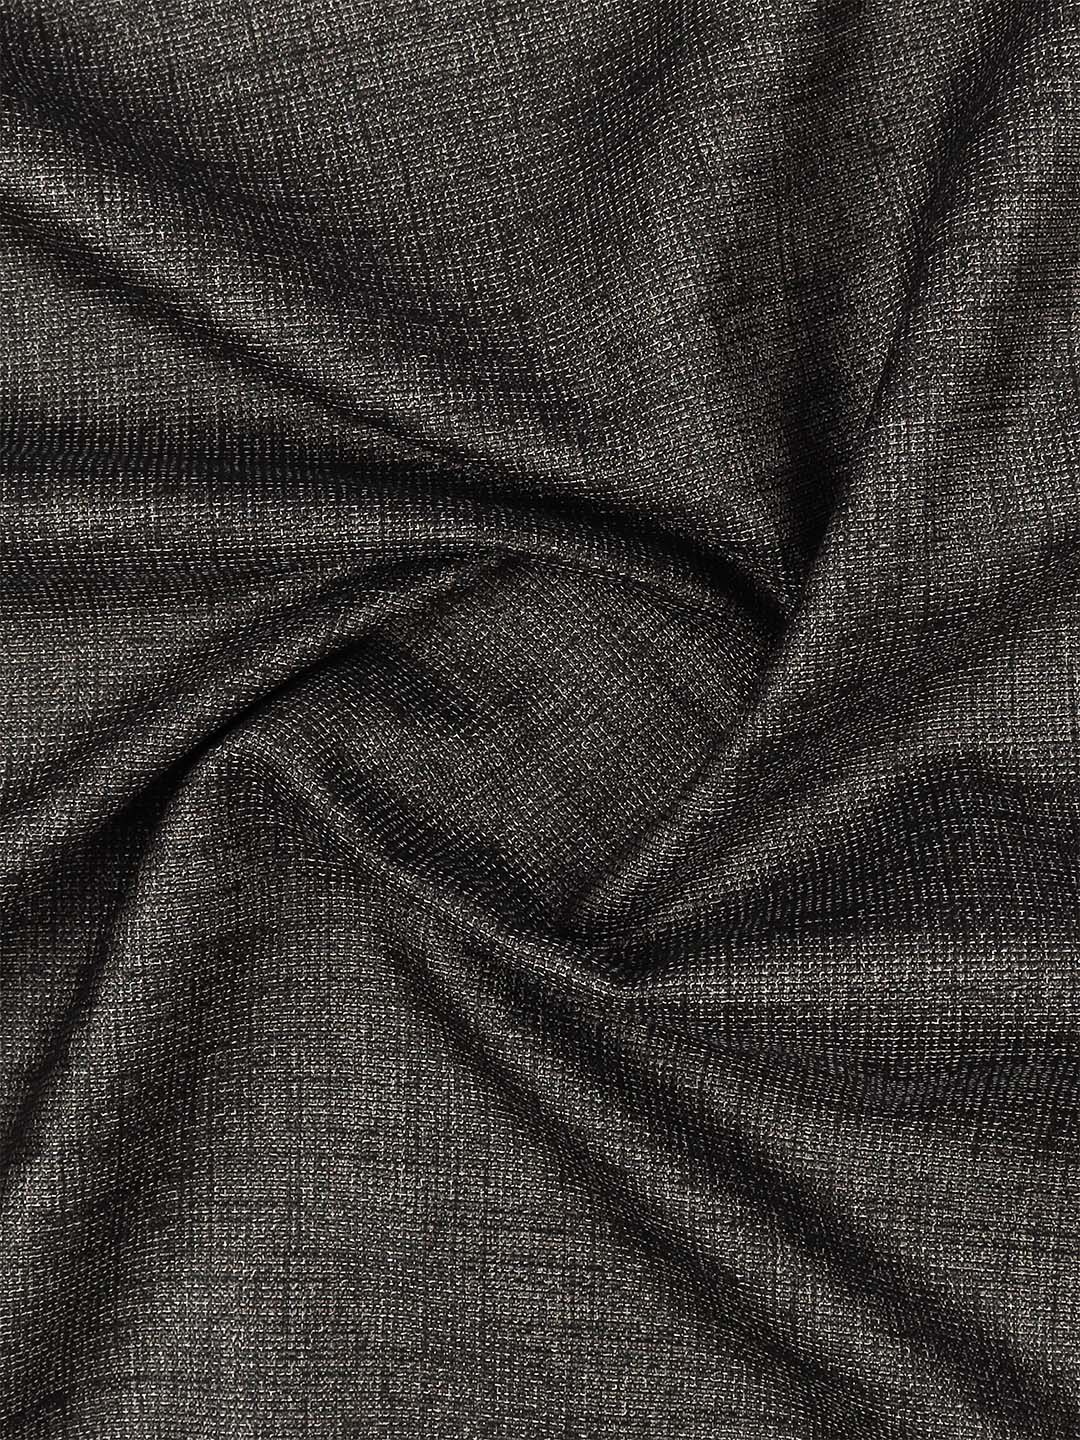 Premium Cotton Colour Black Pants Fabric Air Craft